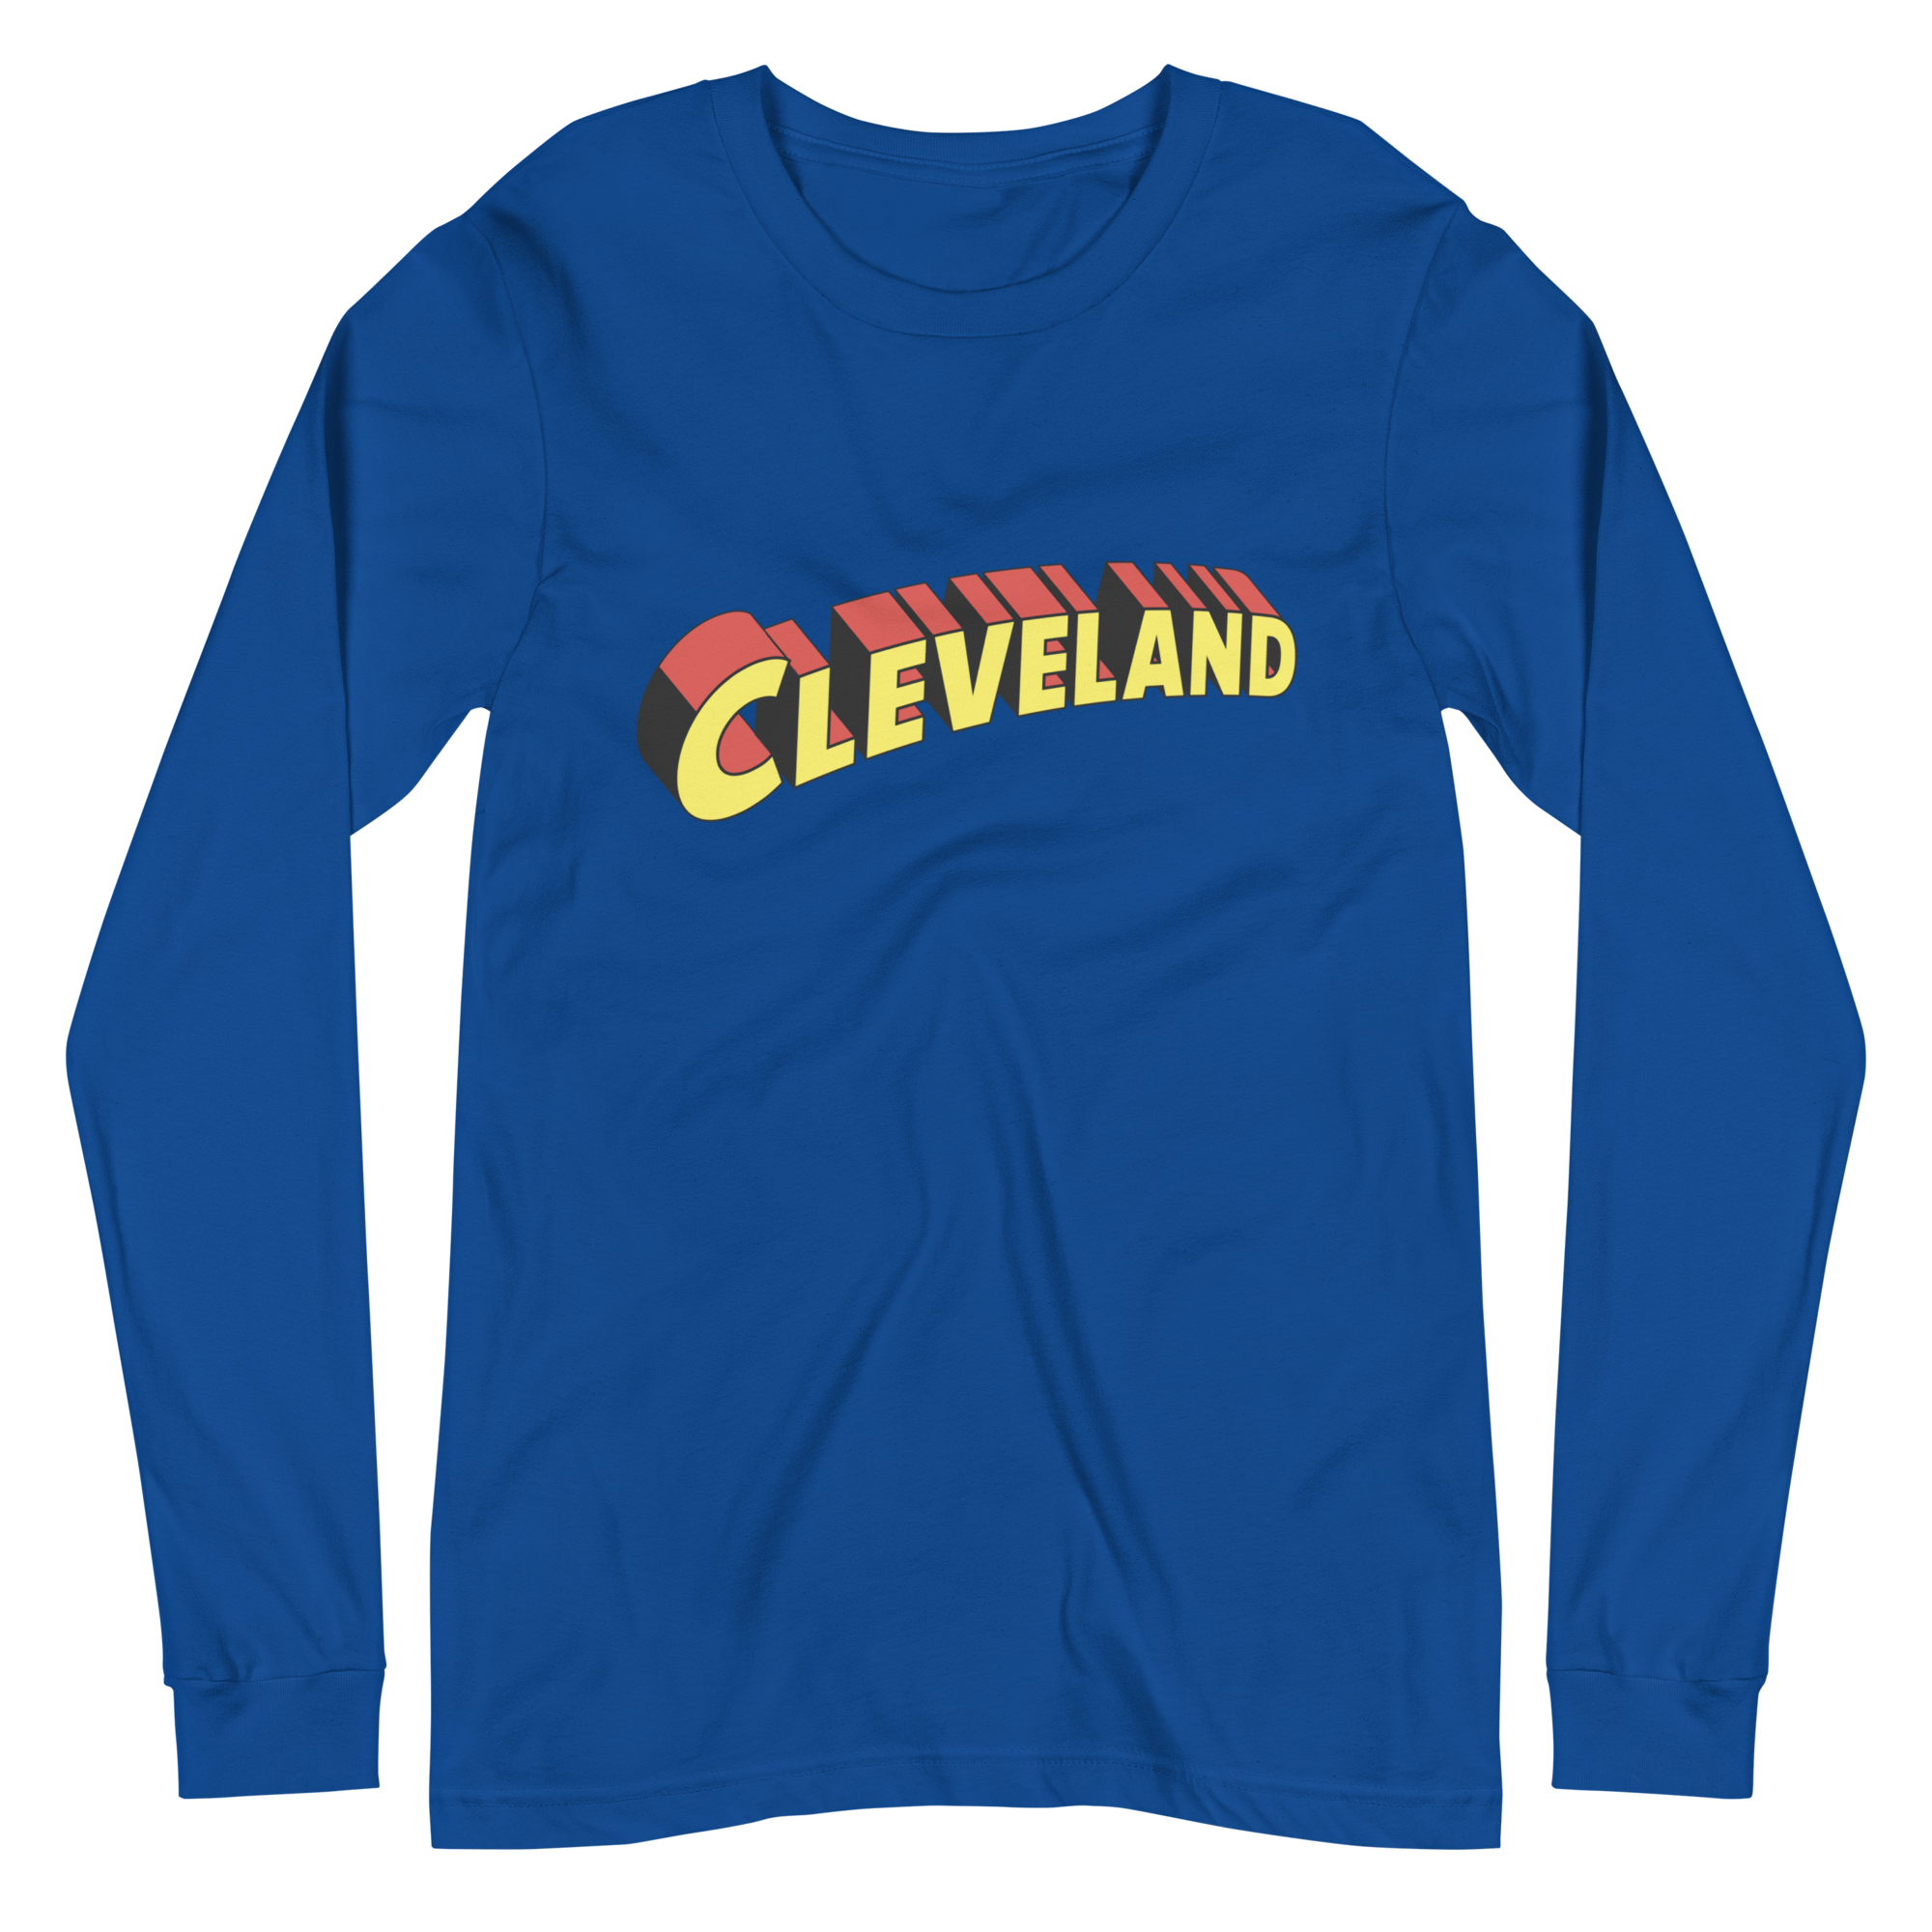 Cleveland Superhero Long-Sleeve Shirt